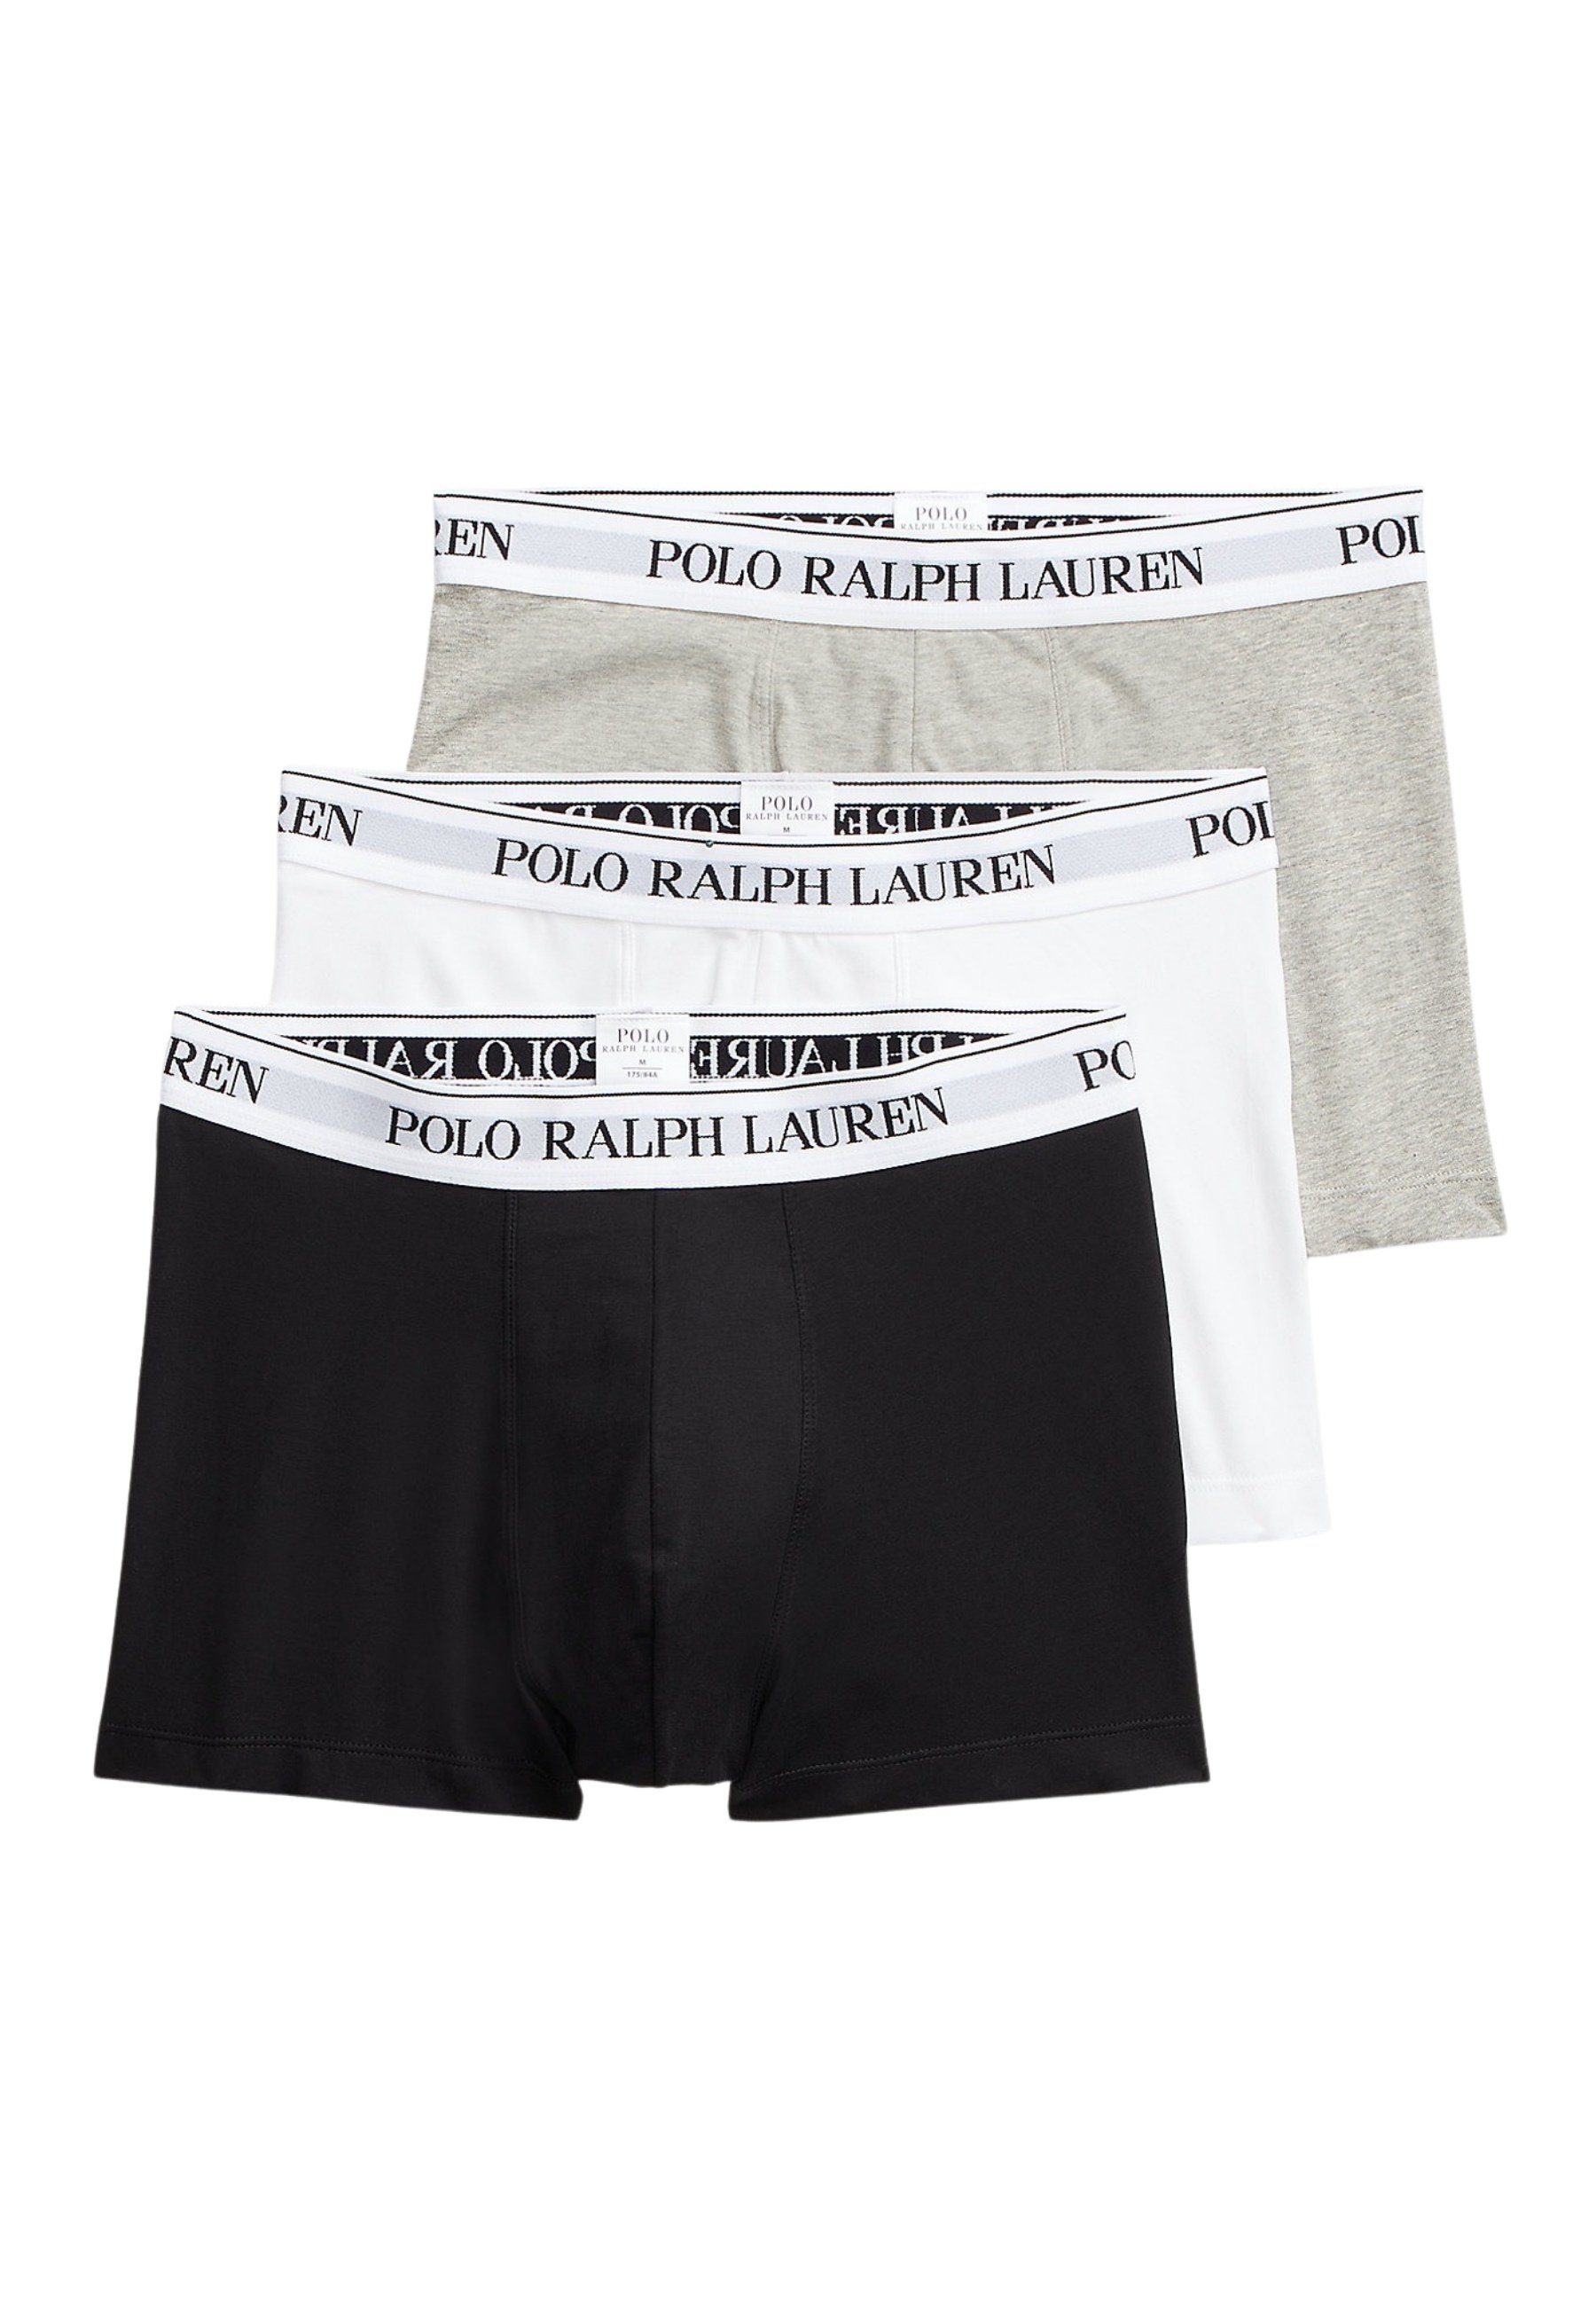 Polo Ralph Lauren Ralph Unterhose 3er Boxershorts Schwarz/Weiß/Grau Pack Lauren Trunks (3-St)